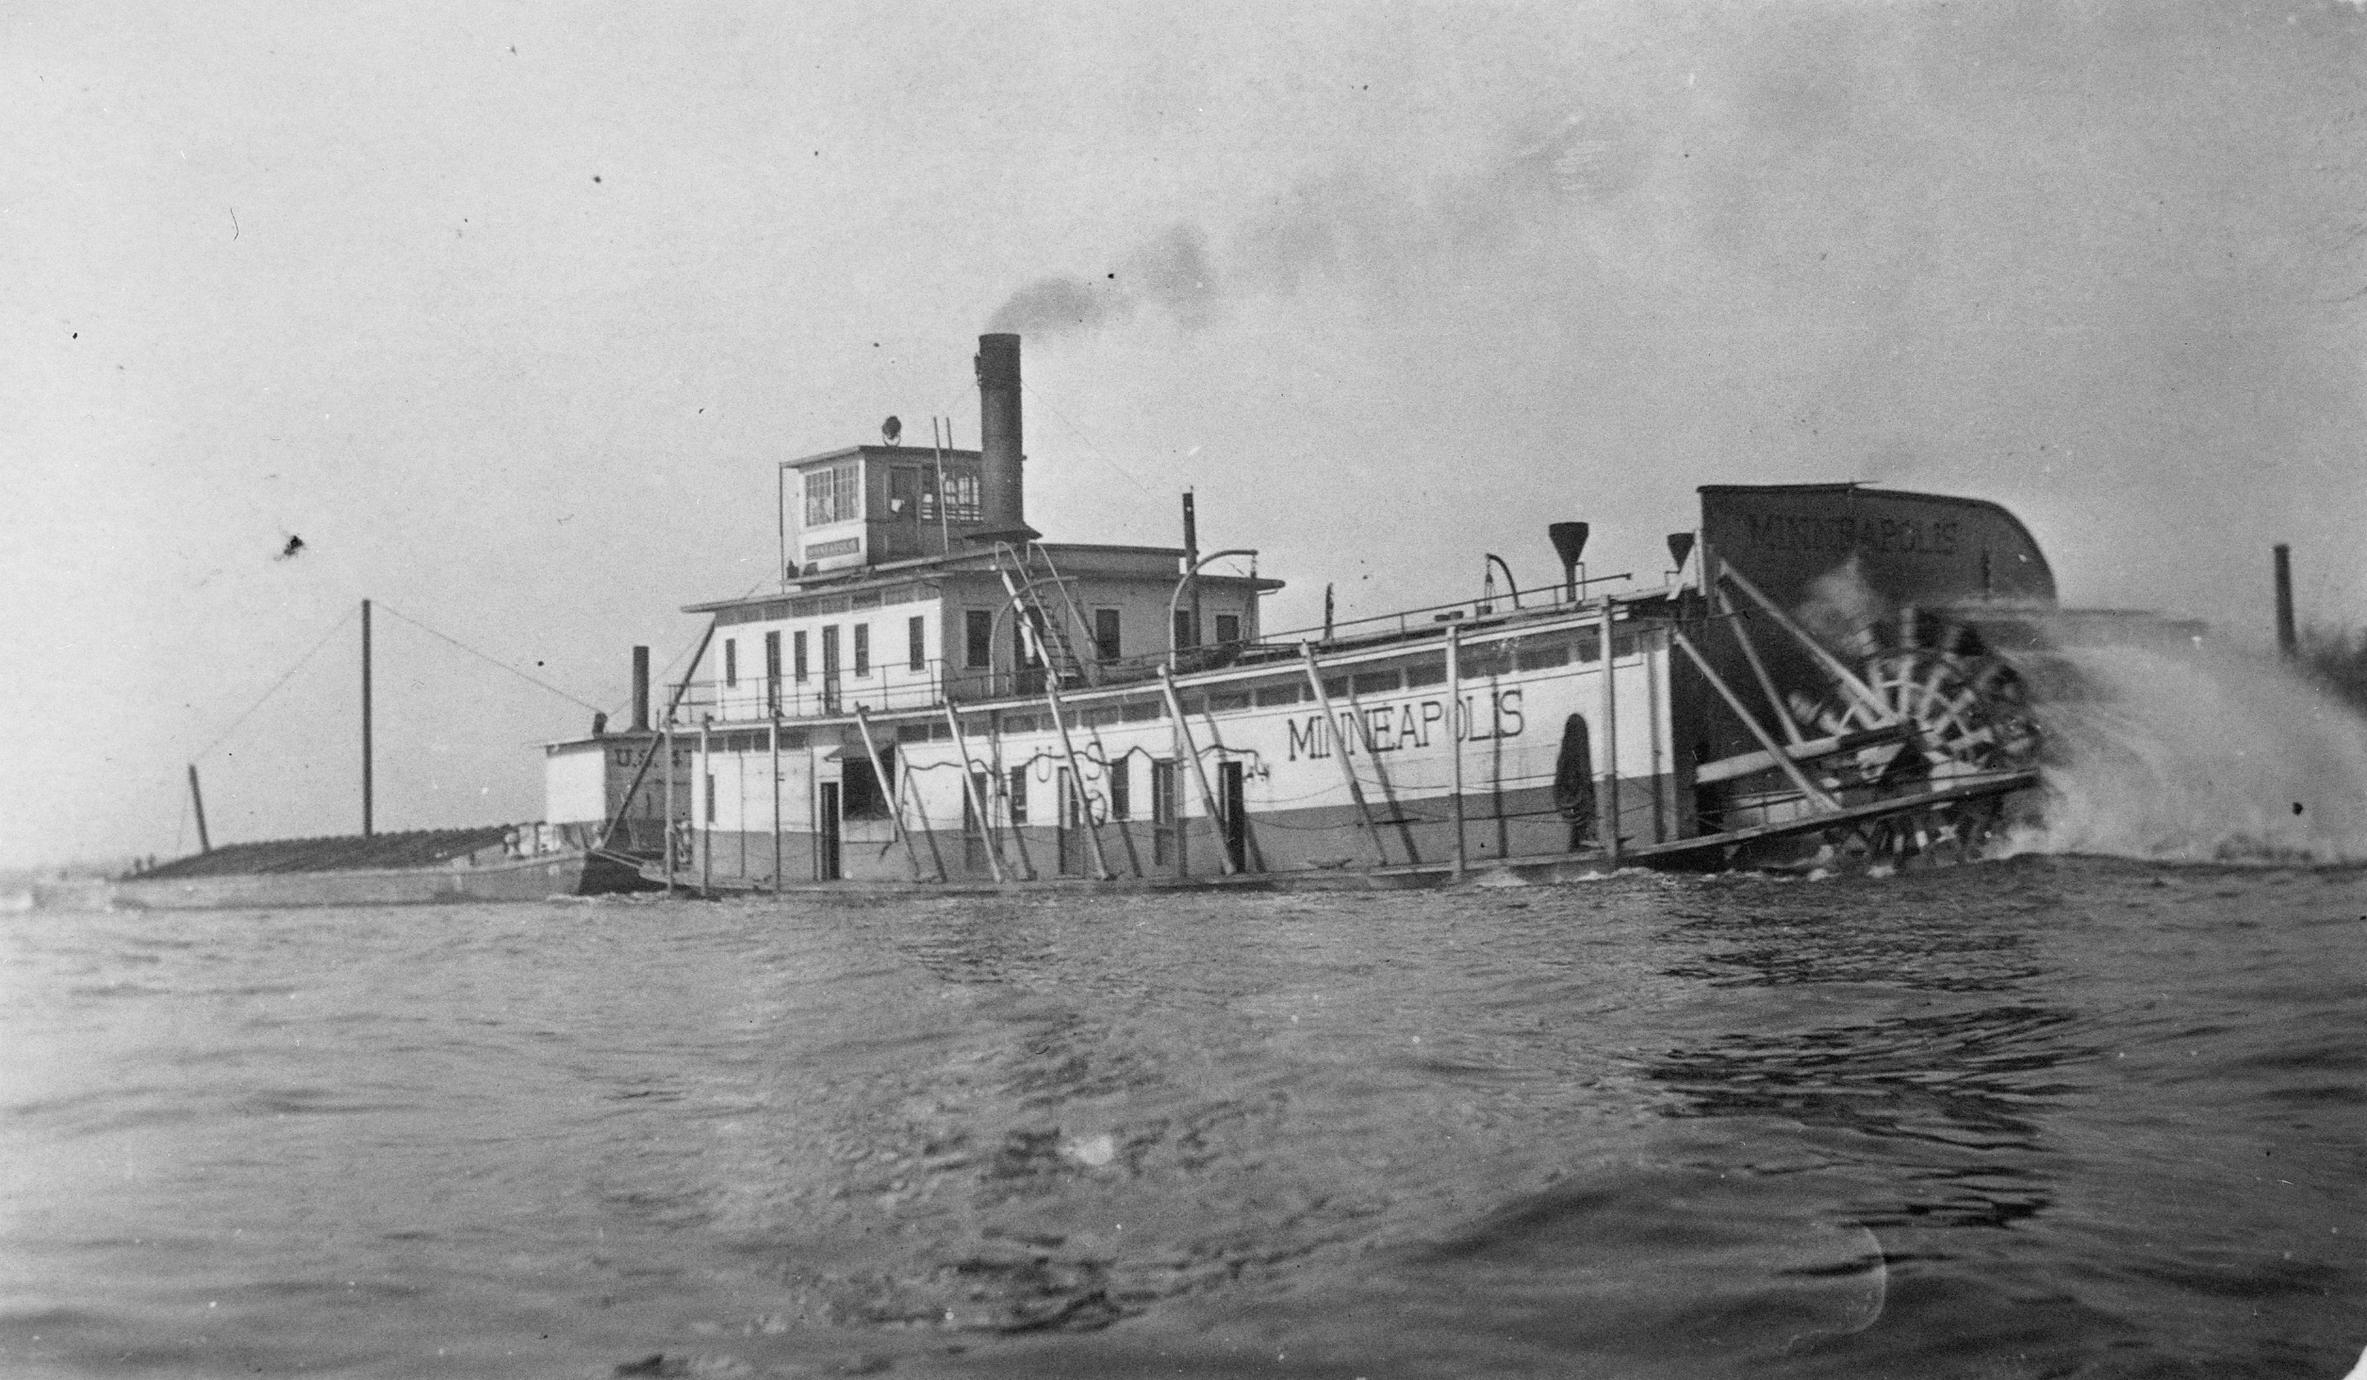 Minneapolis (Towboat, 1915-1939)